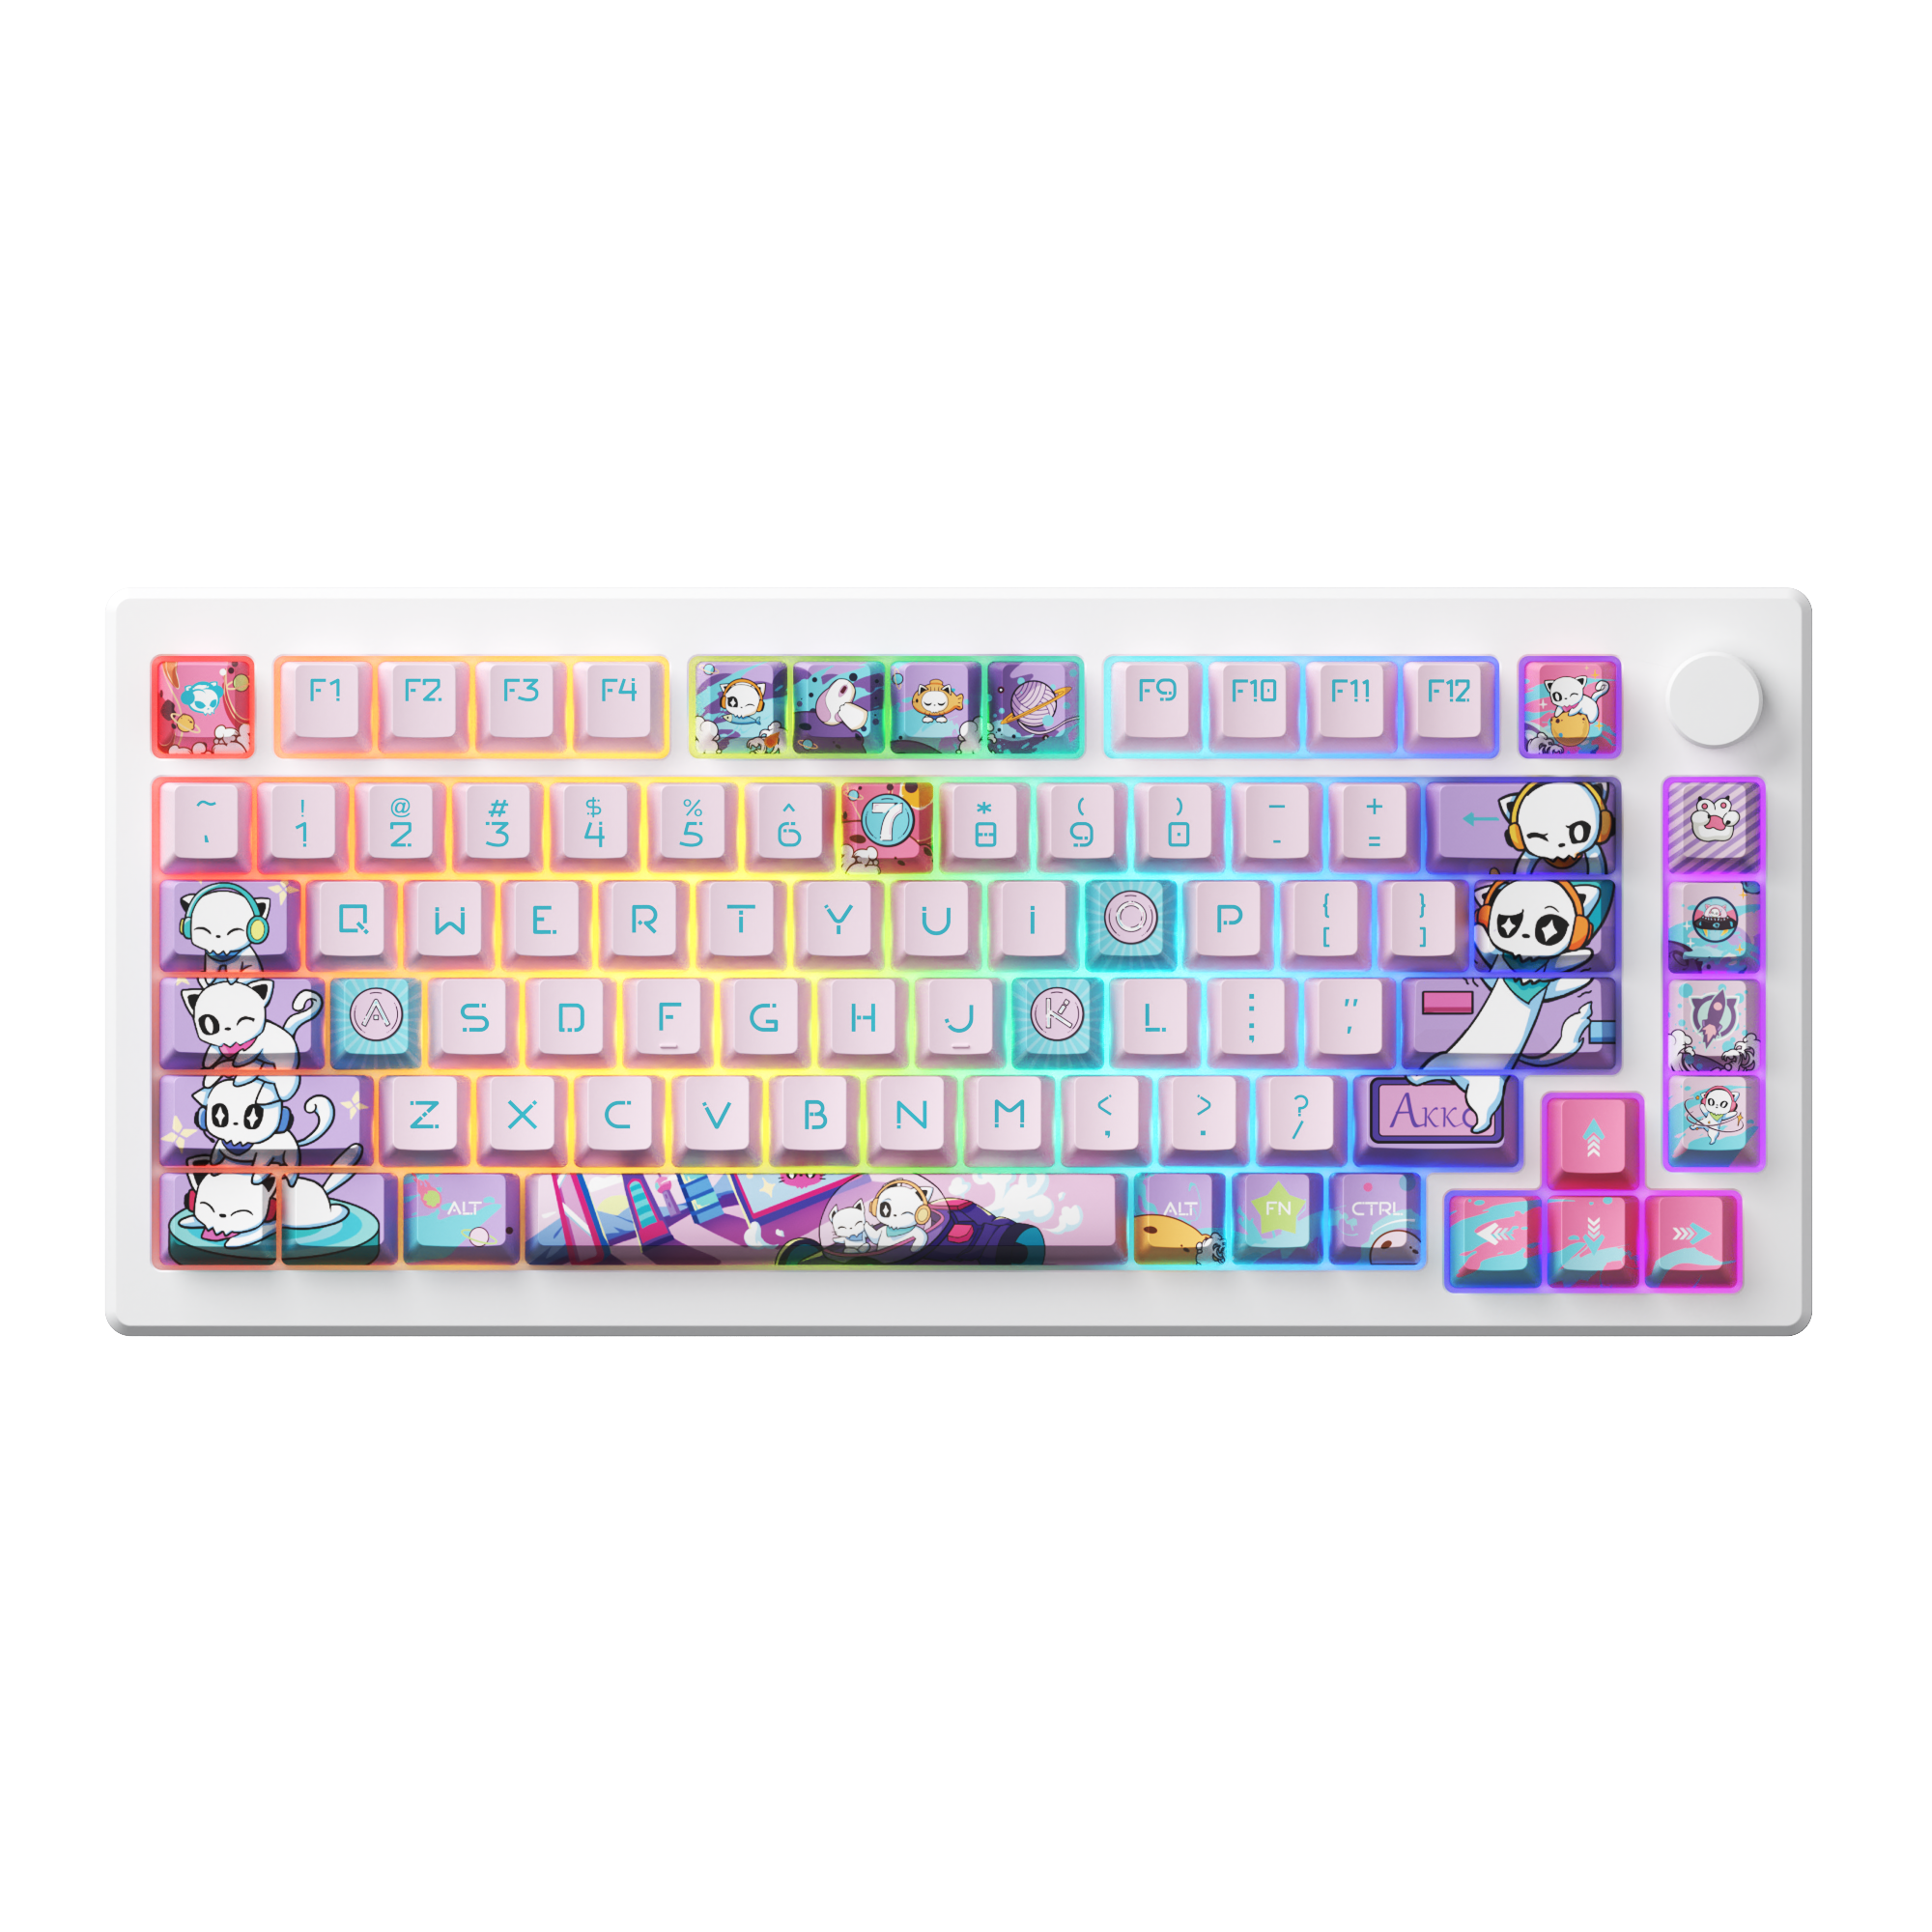 Custom Keyboards France